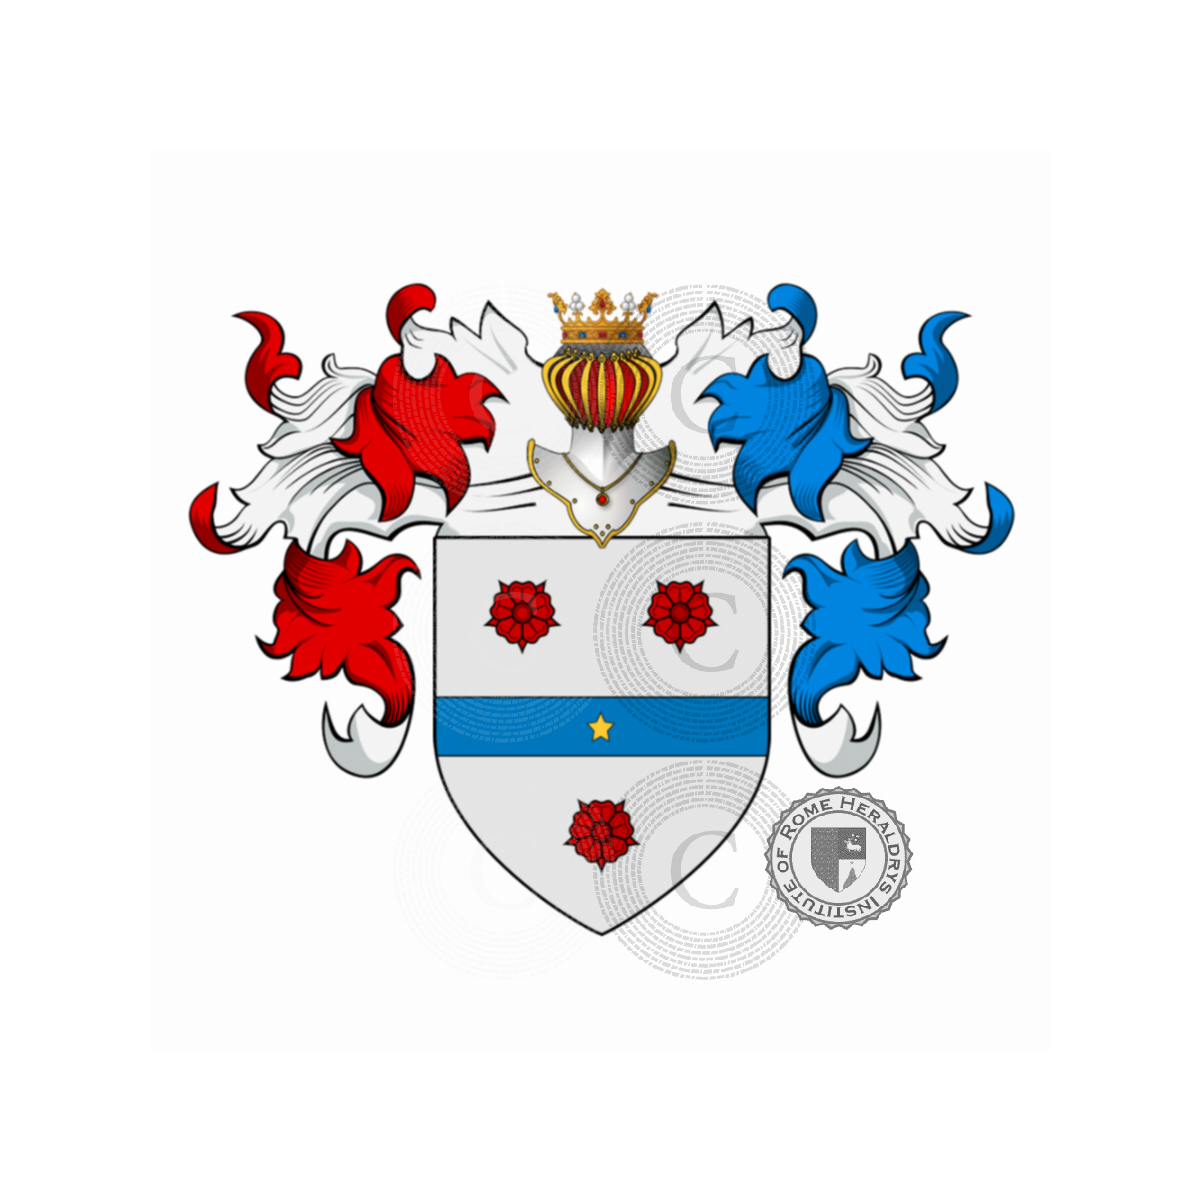 Wappen der FamilieFioravanti, Fieravanti,Fiorante,Fioranti,Fioravante